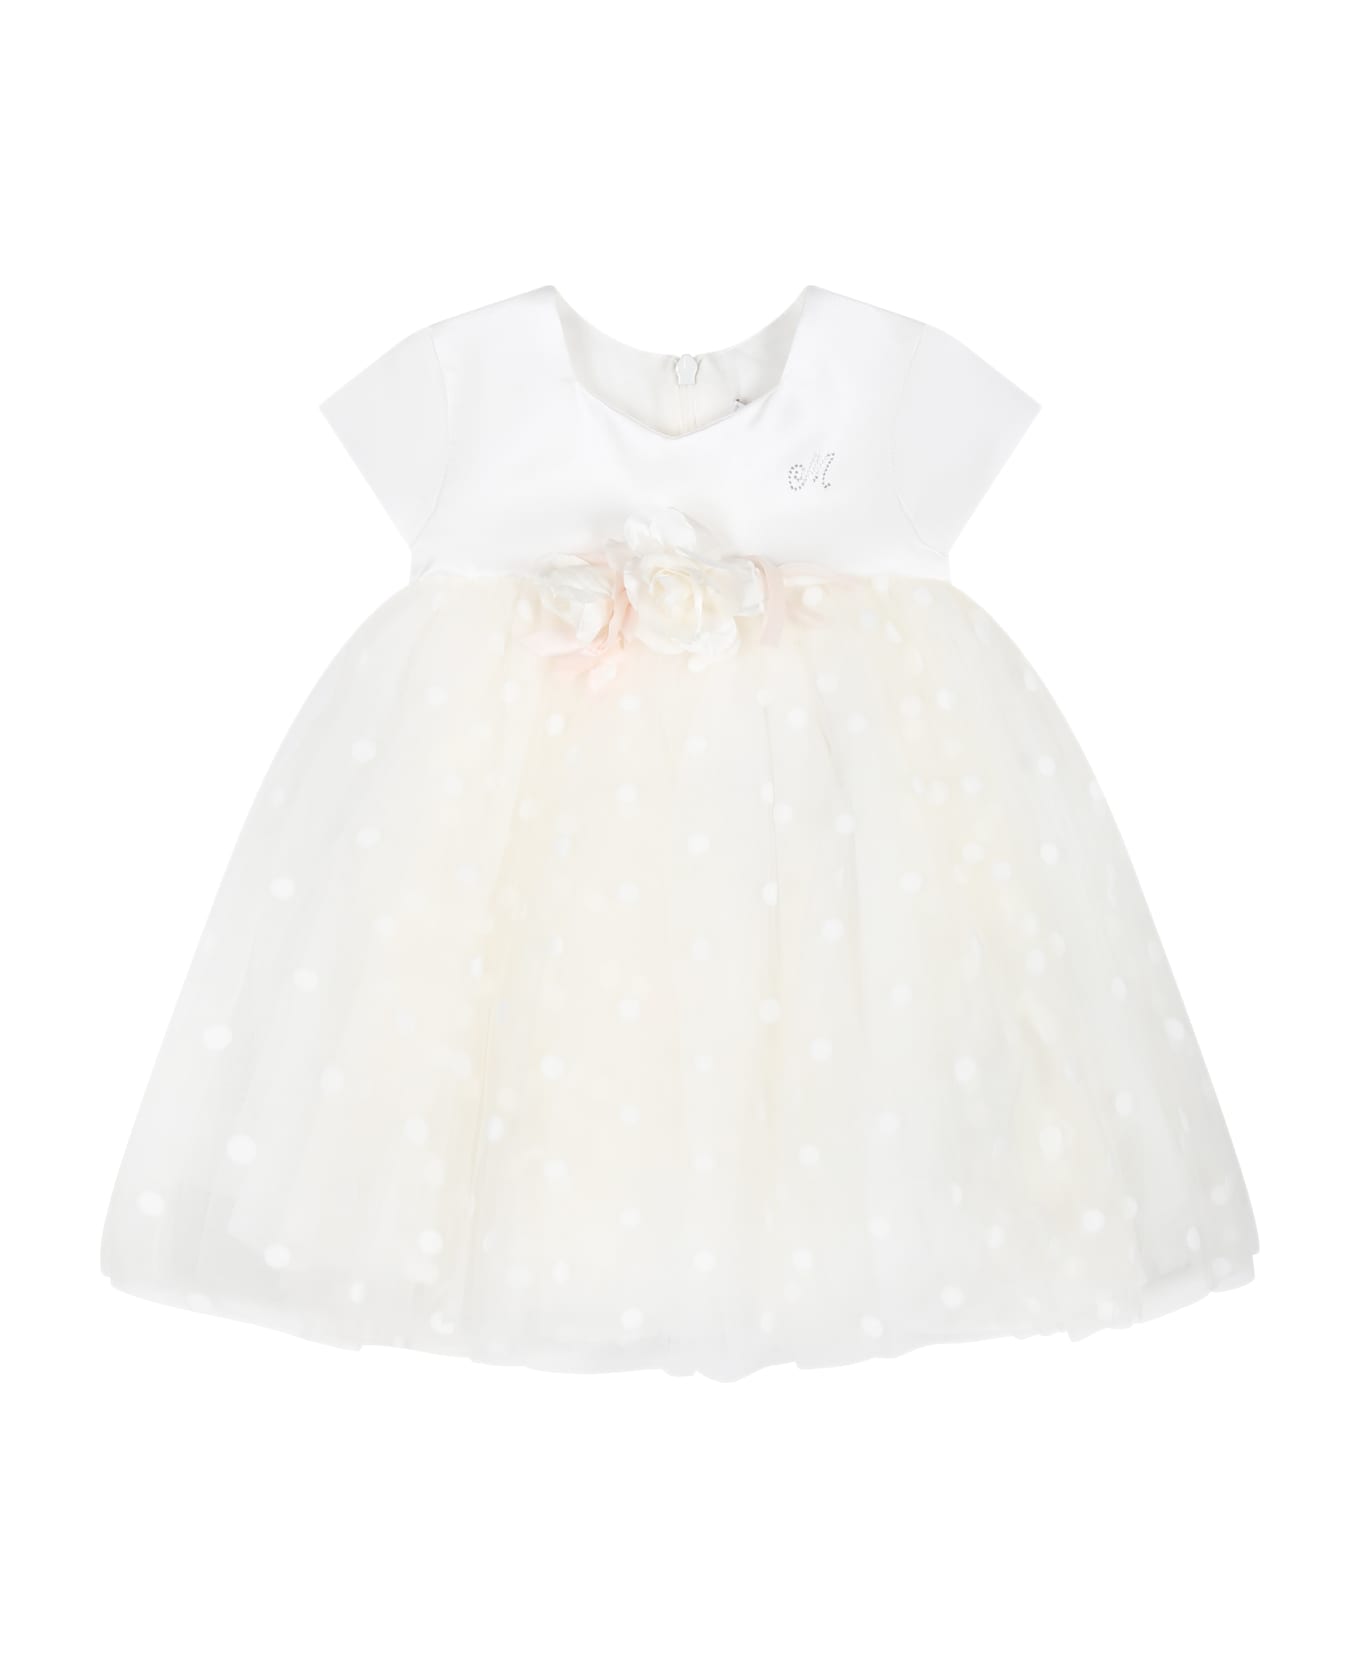 Monnalisa White Dress For Baby Girl With Polka Dots - White